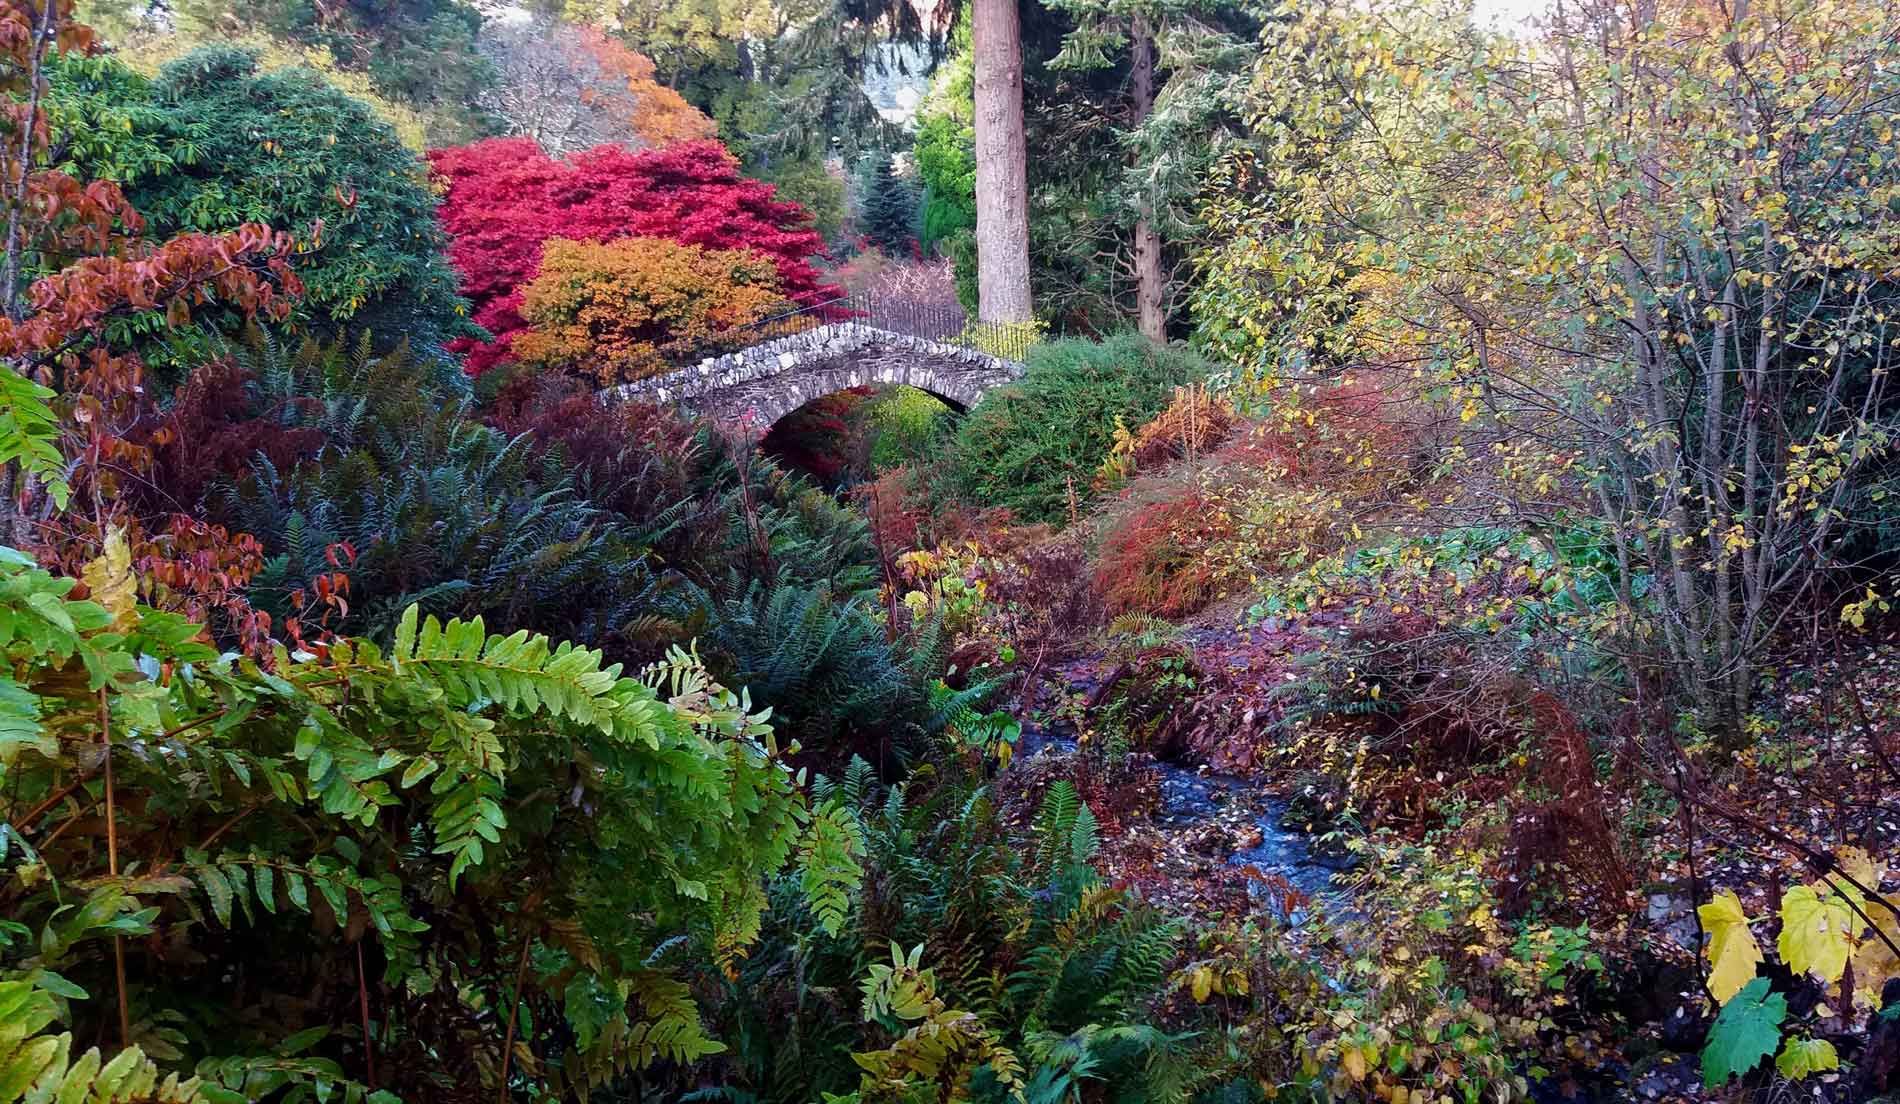 The Dutch Time Bridge at Dawyck Botanic Garden in Autumn